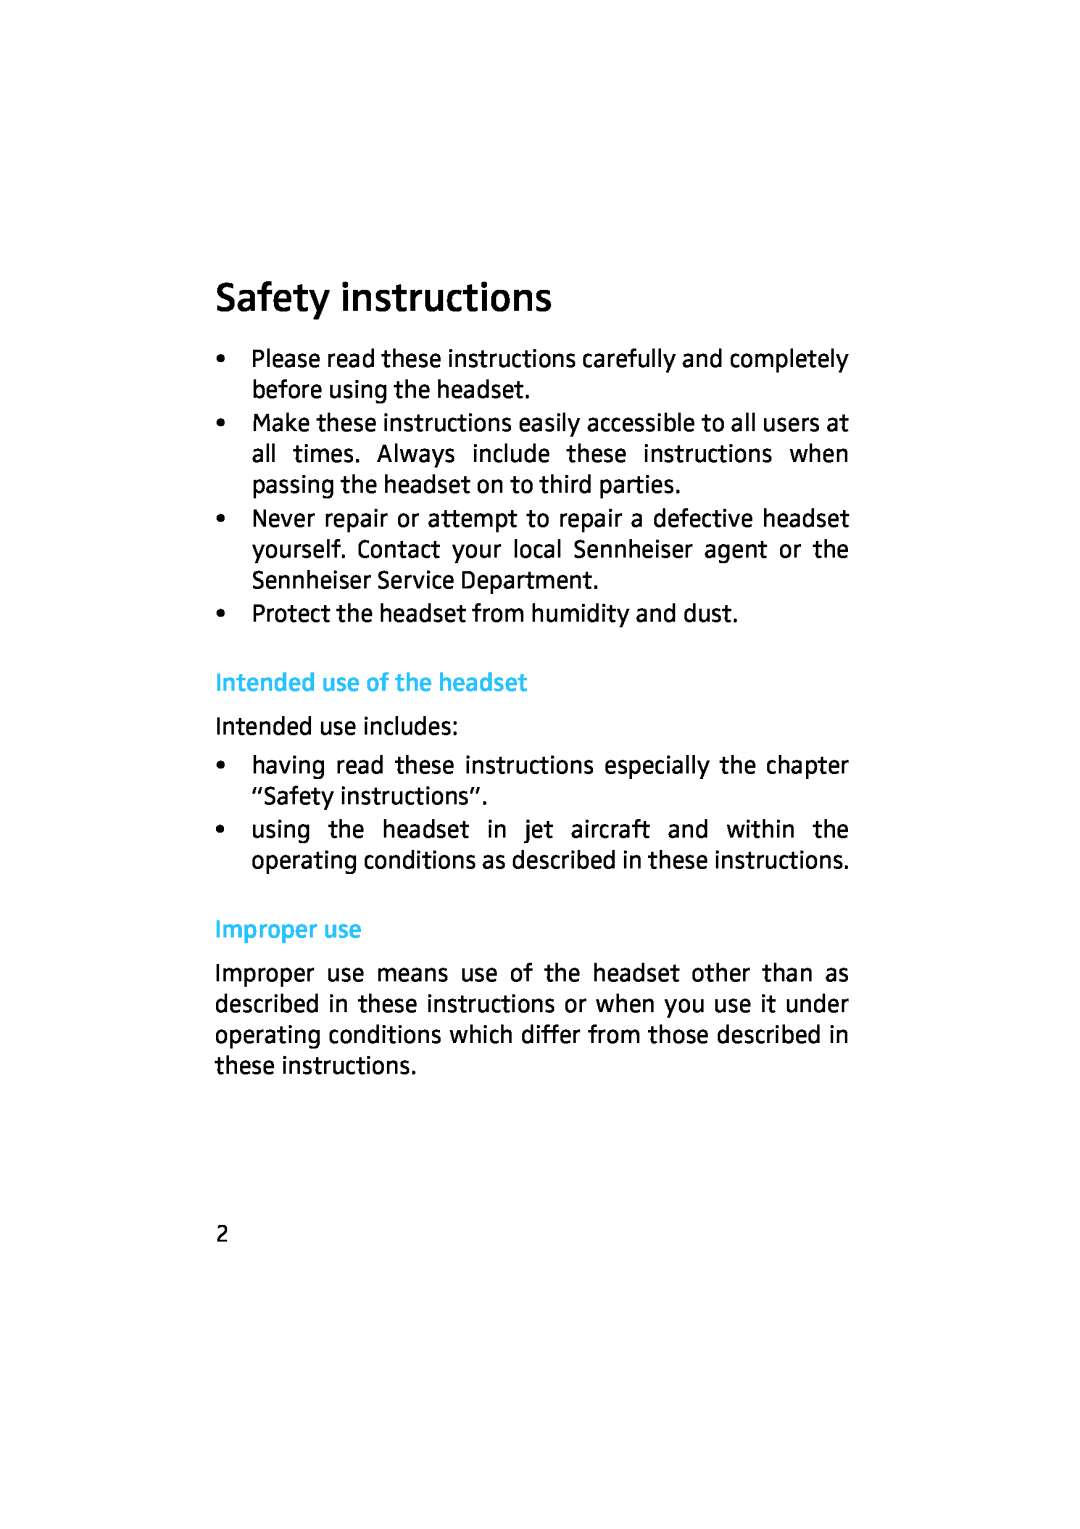 Sennheiser HME 43-K manual Safety instructions, Intended use of the headset, Improper use 